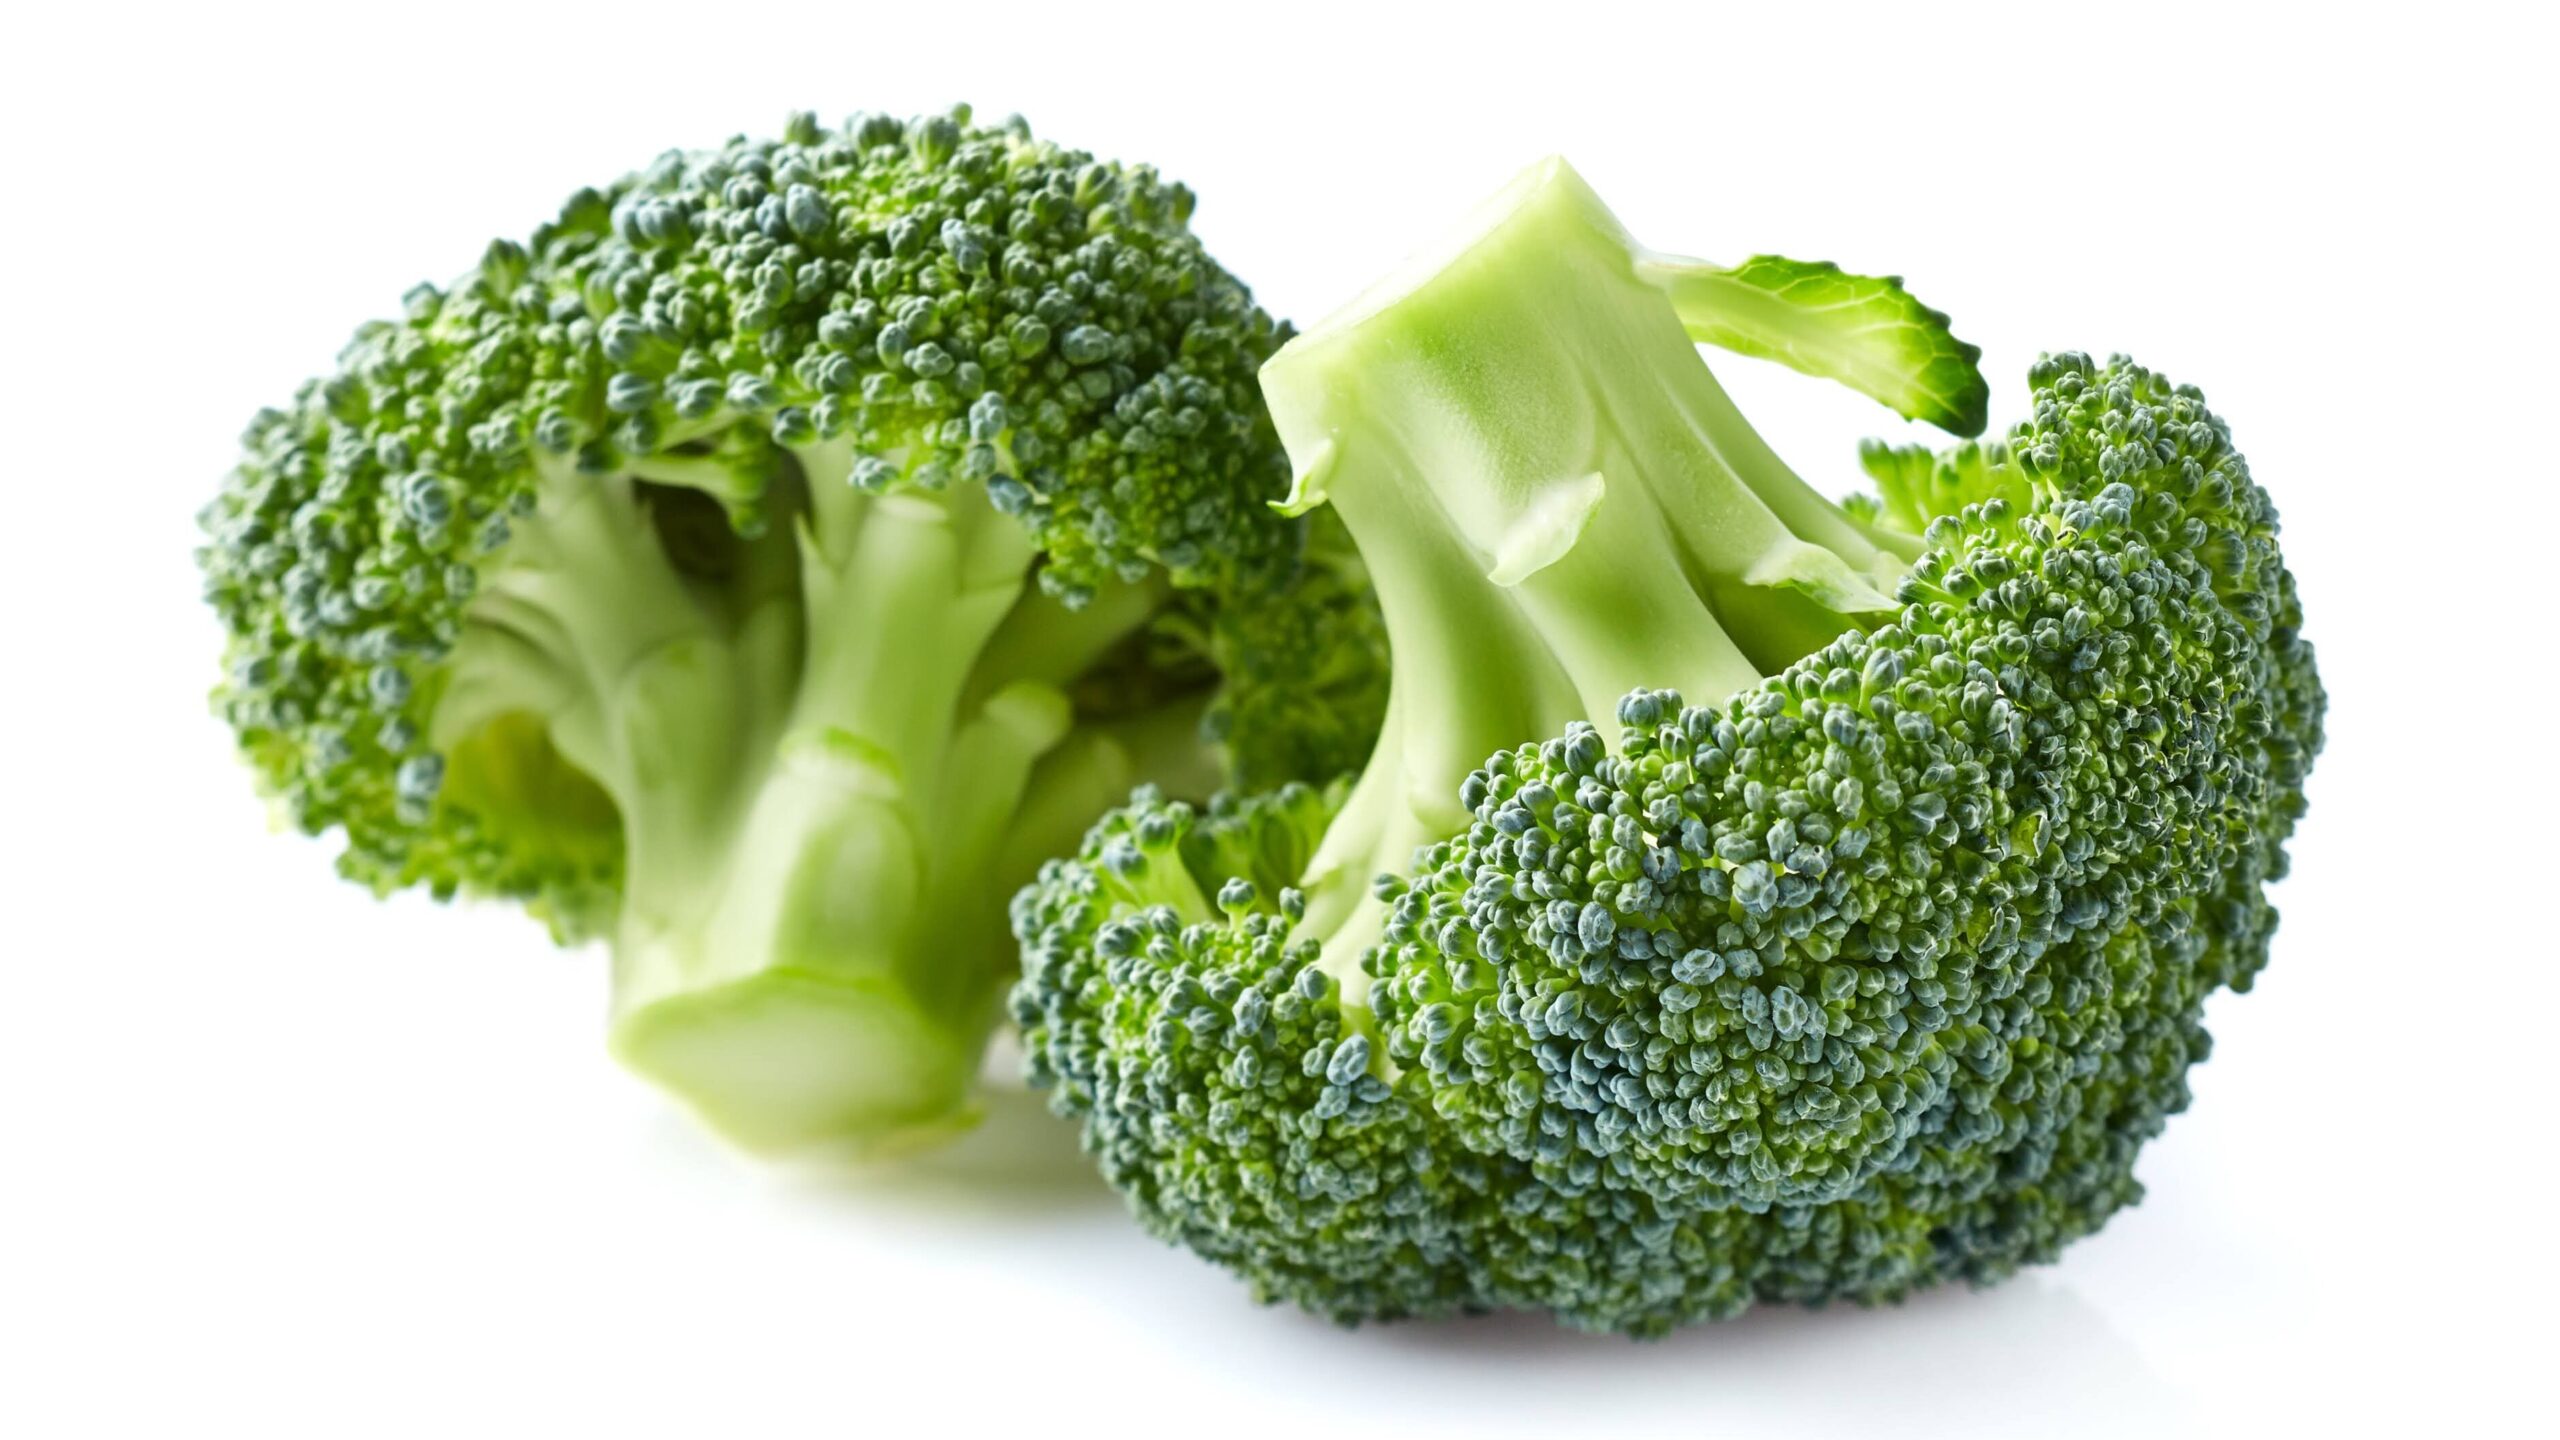 Broccoli in closeup